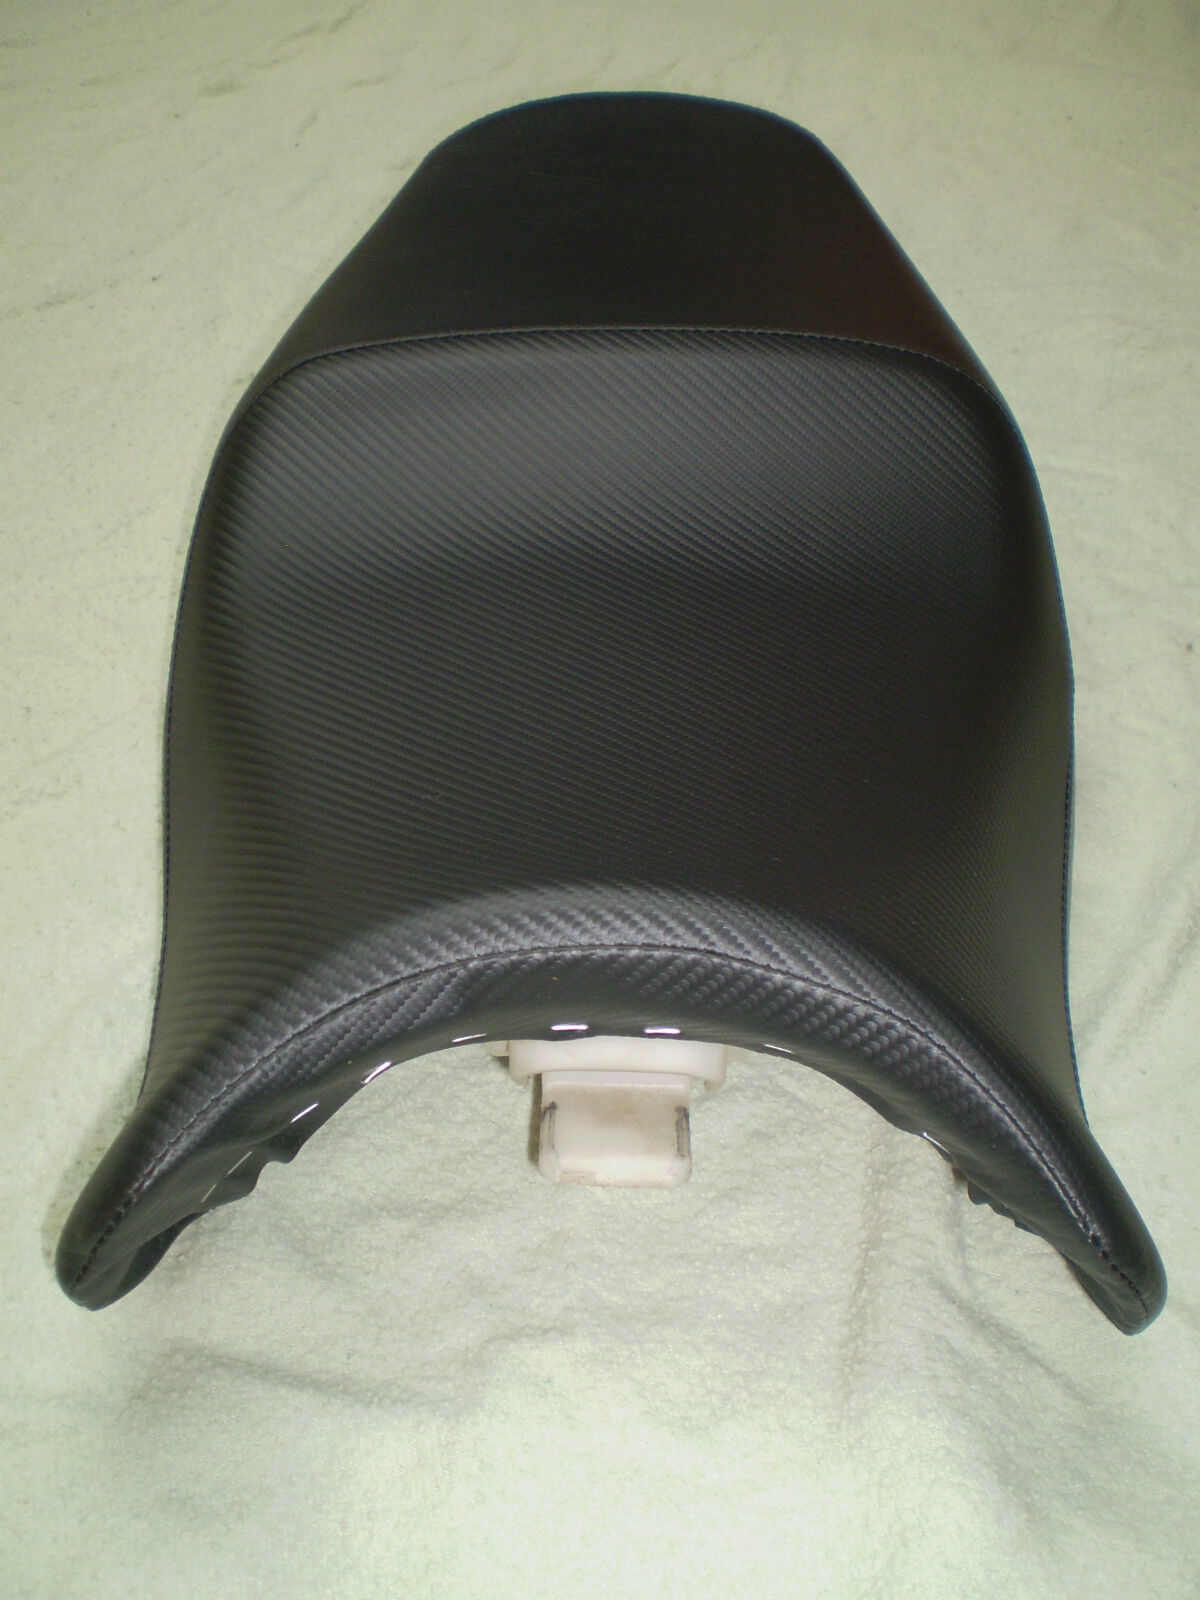 2000-05 Suzuki Bandit  "CARBON FIBER SEAT COVER"   fits GSF600  GSF1200  "L@@K"